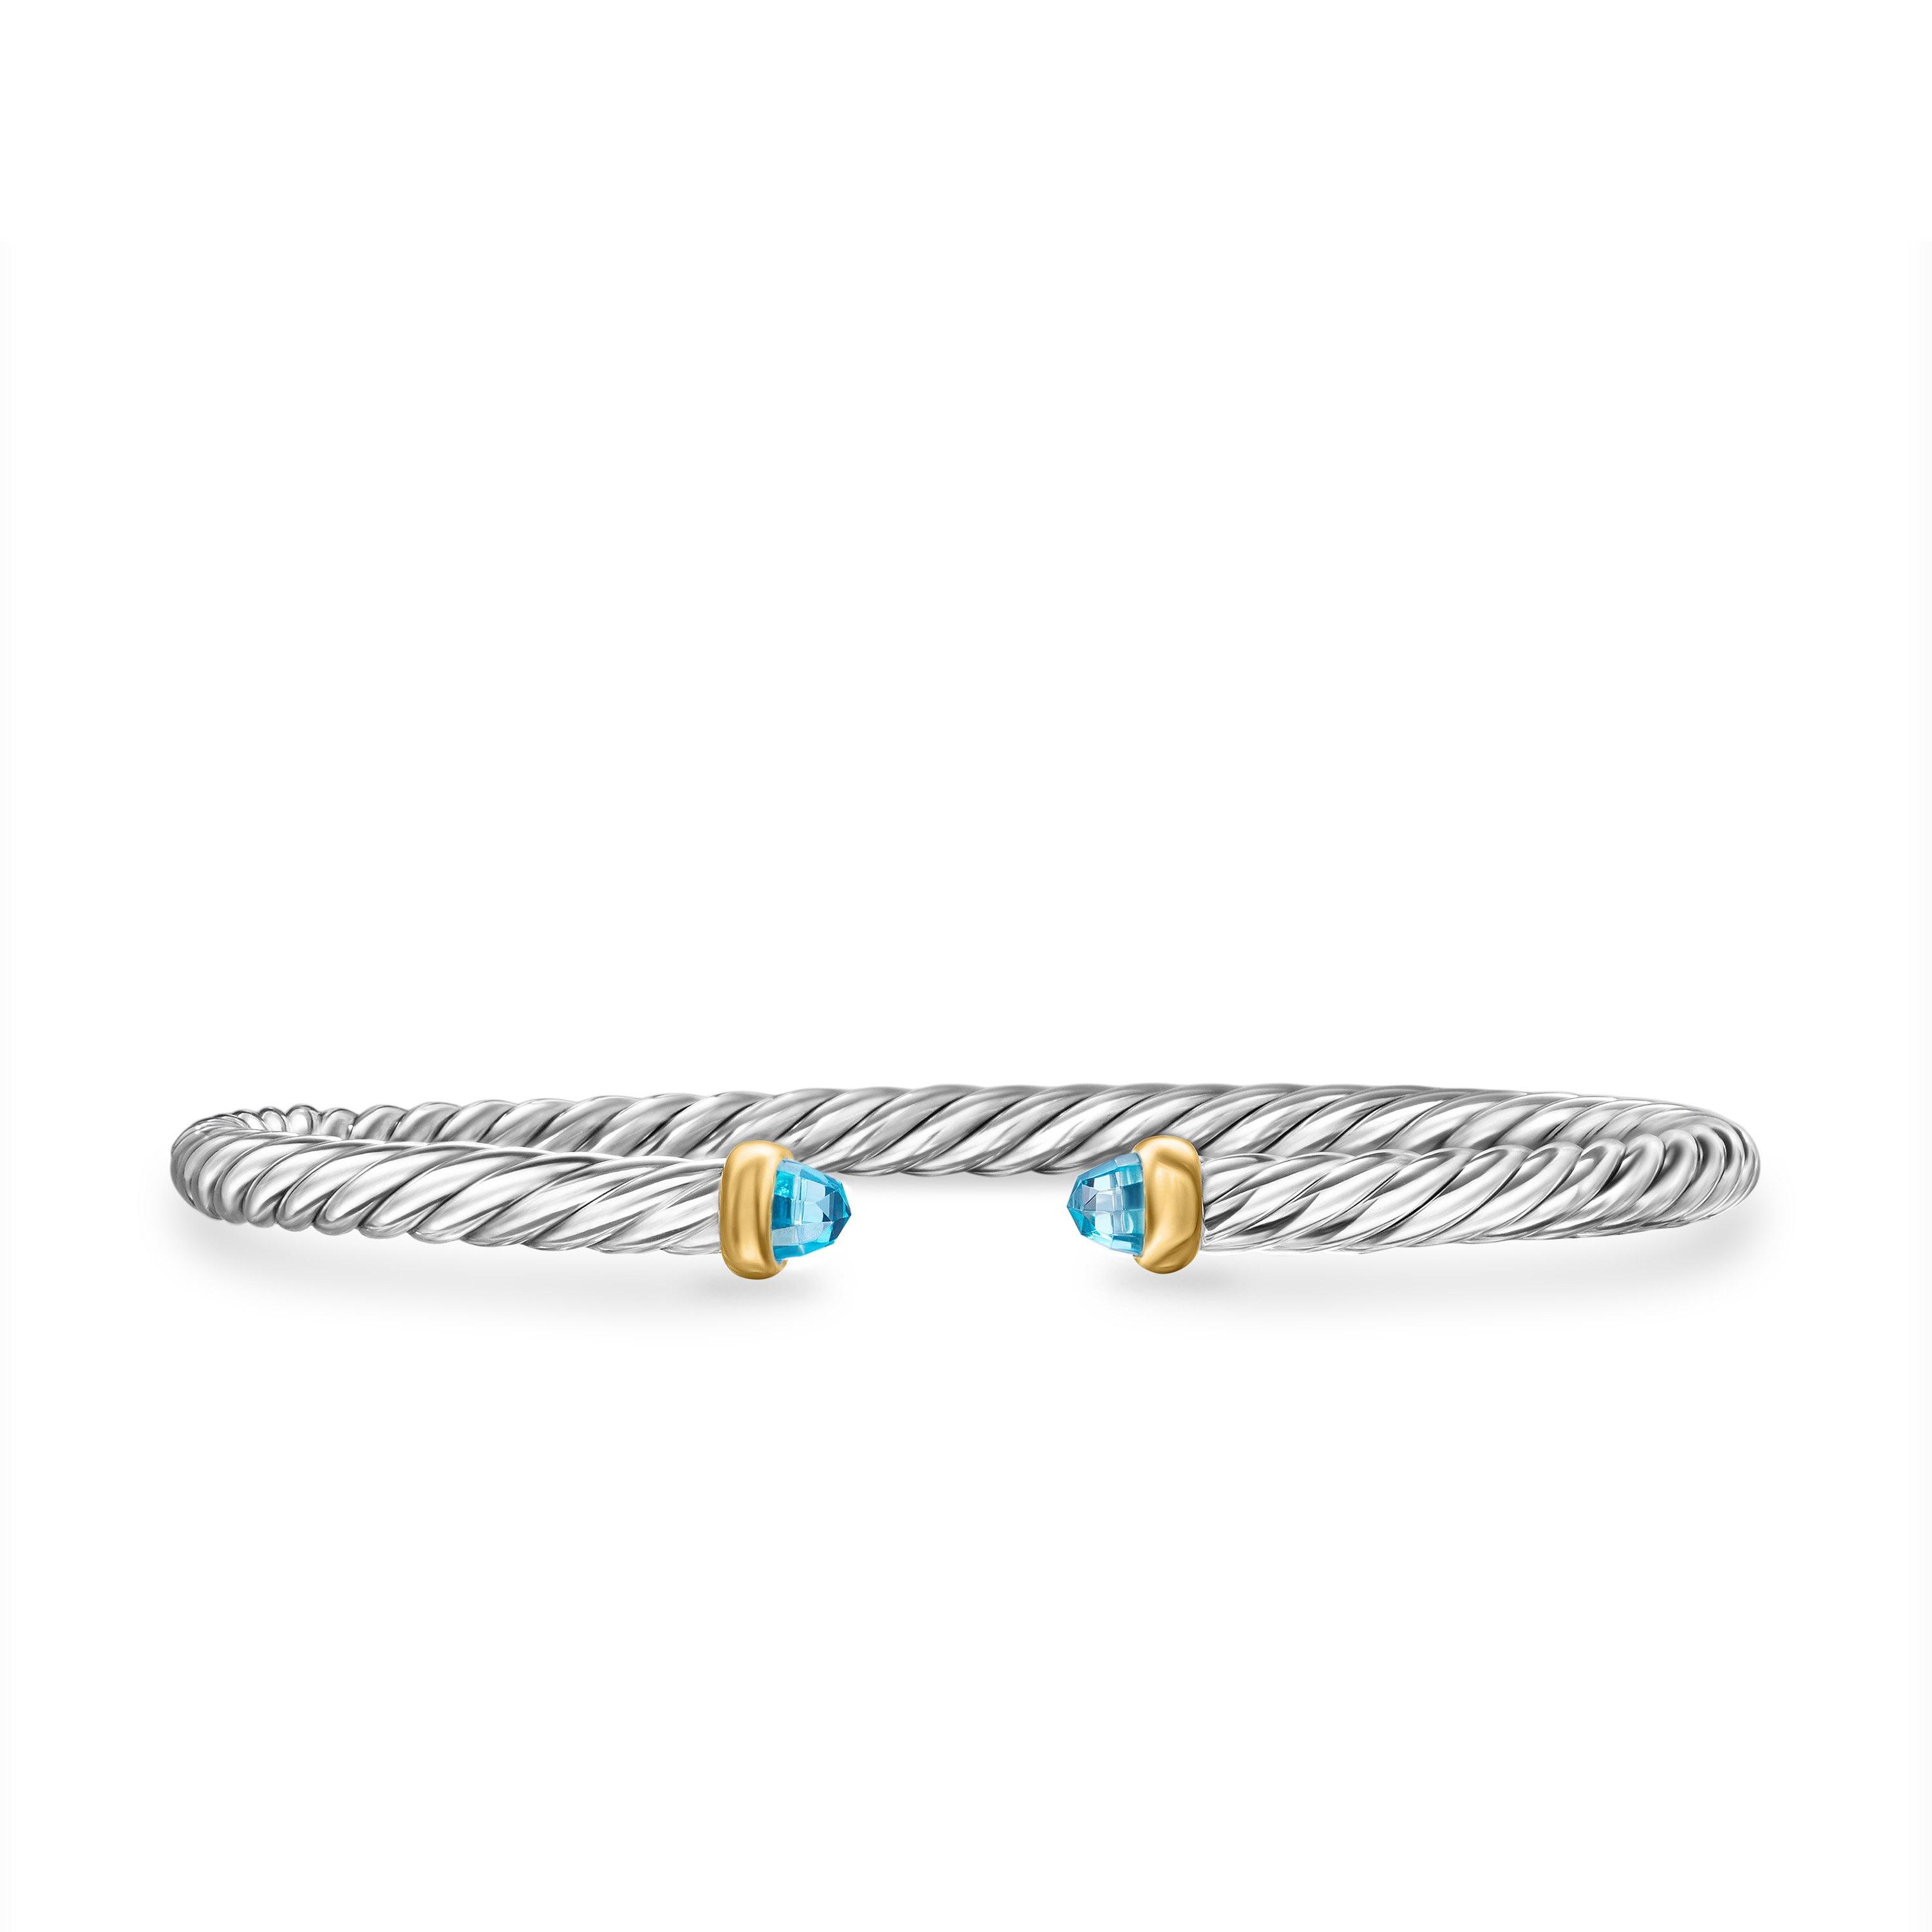 David Yurman Cable Flex Sterling Silver Bracelet with Blue Topaz, Size Small 0